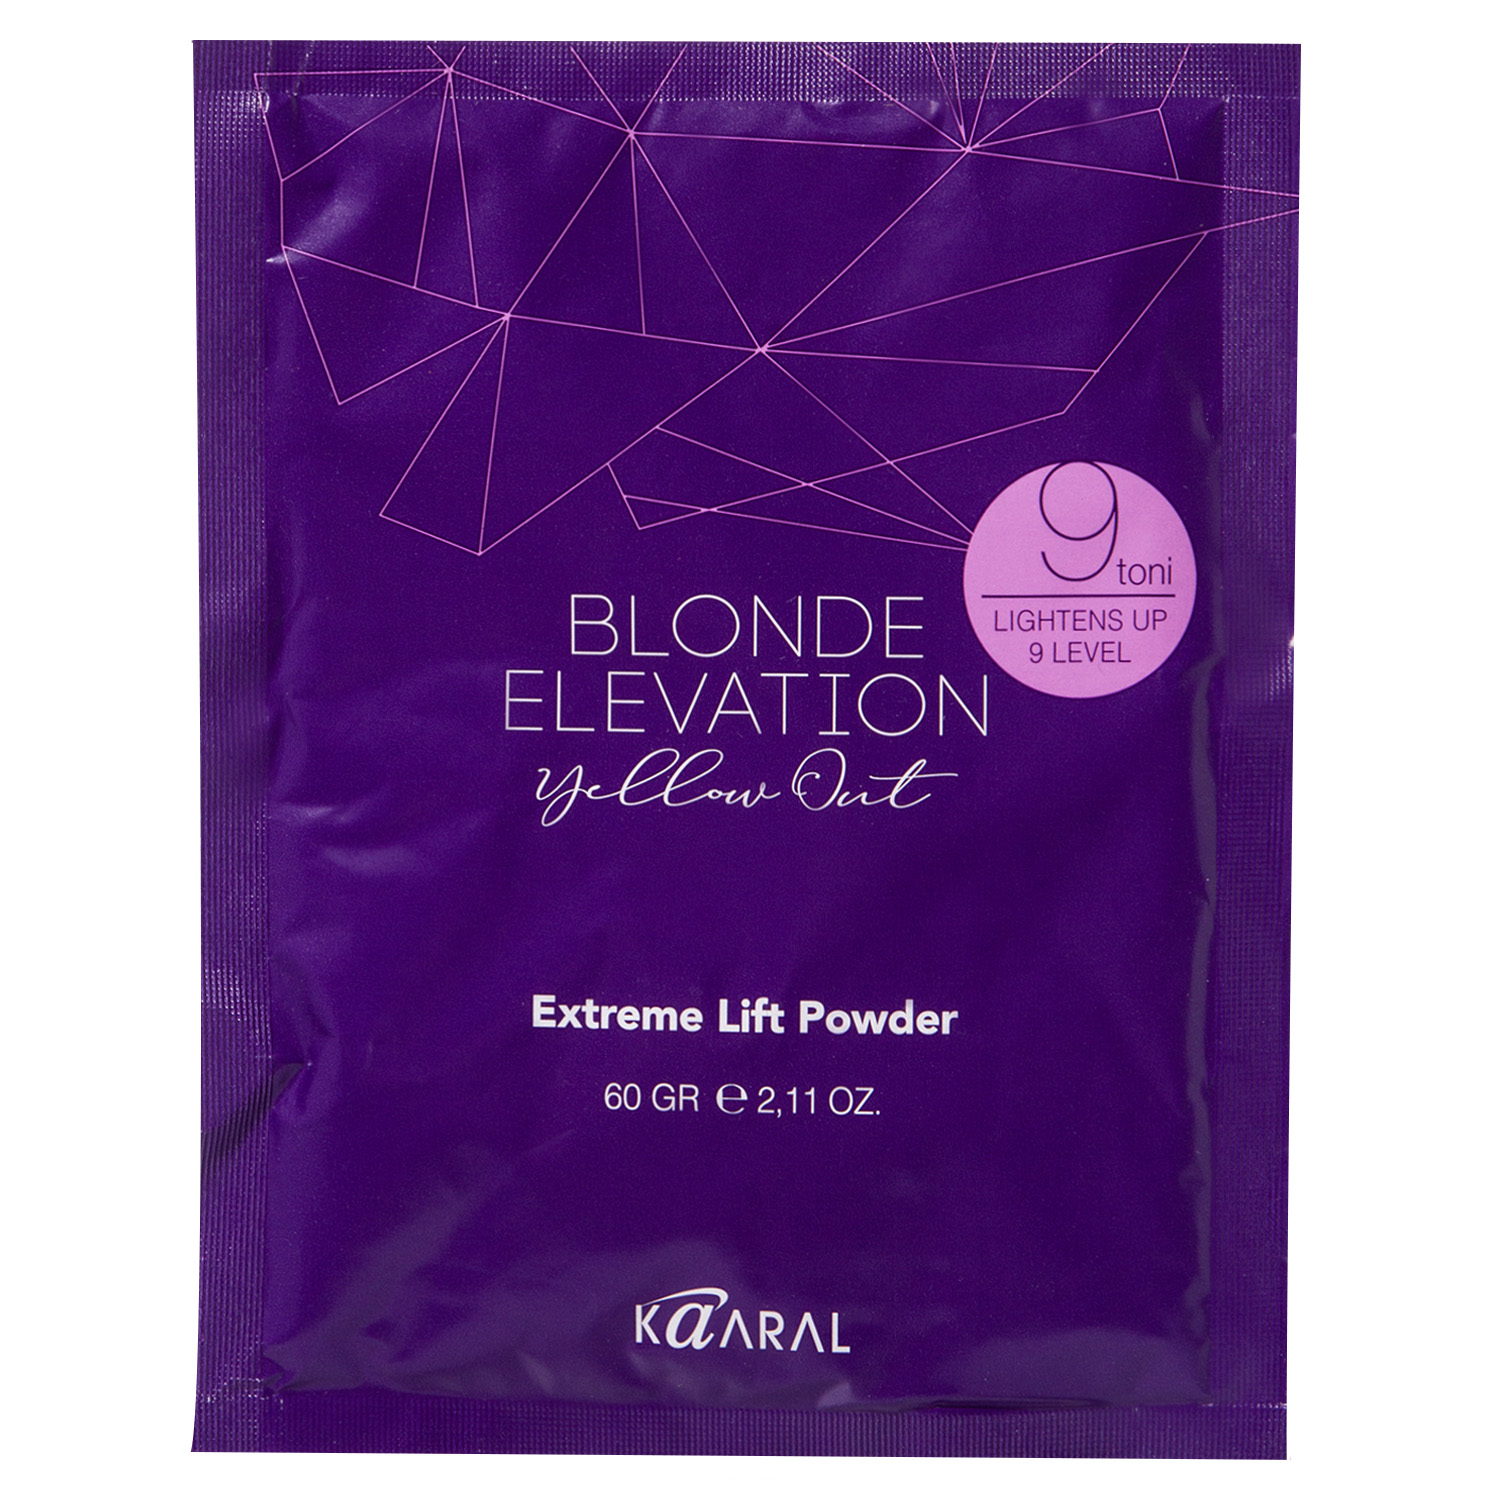 Купить Kaaral Обесцвечивающий порошок Extreme Lift Powder, 60 г (Kaaral, Blonde Elevation)